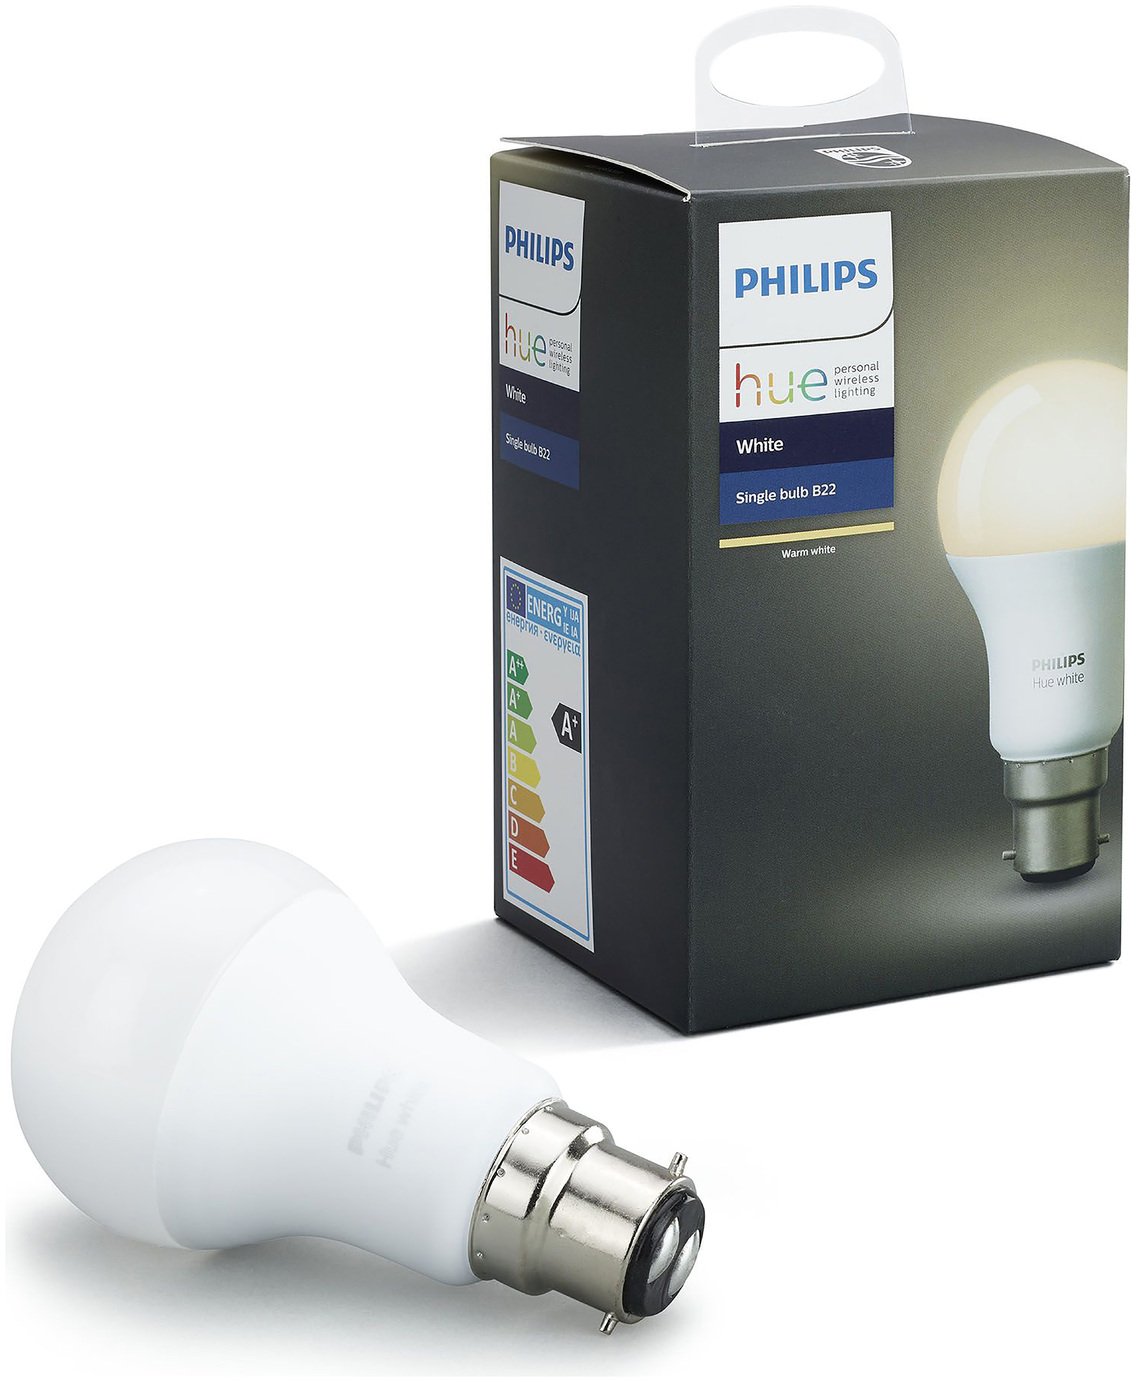 Philips Hue 9.5W LED White Wireless B22 Light Bulb